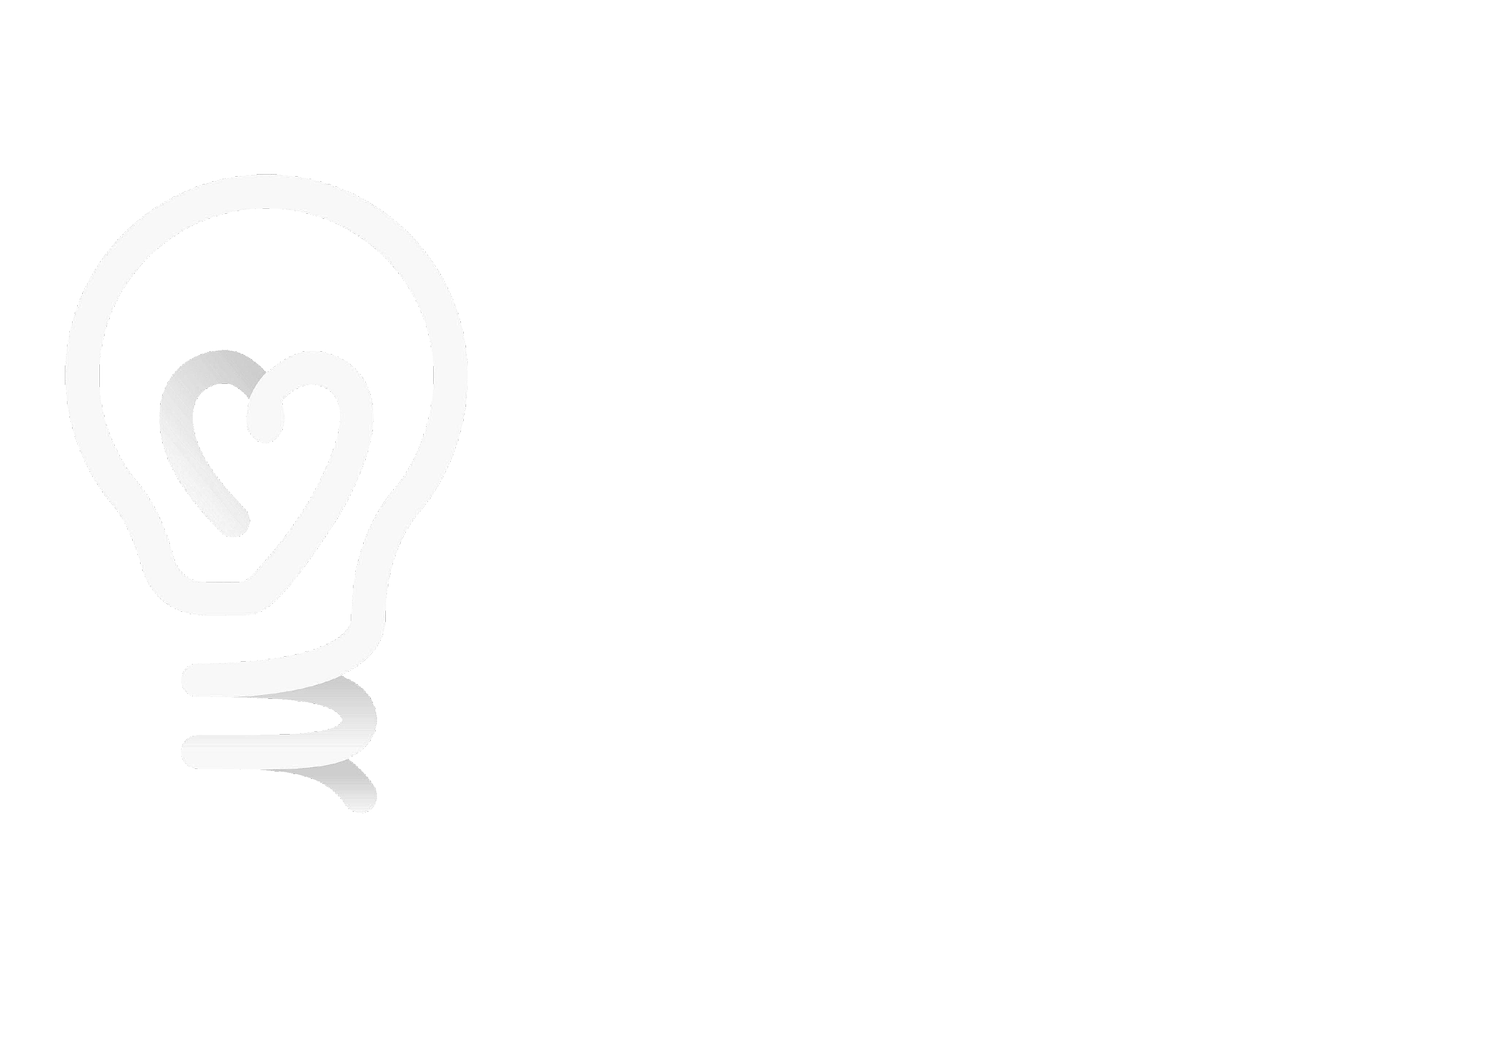 Effective Altruism Finland